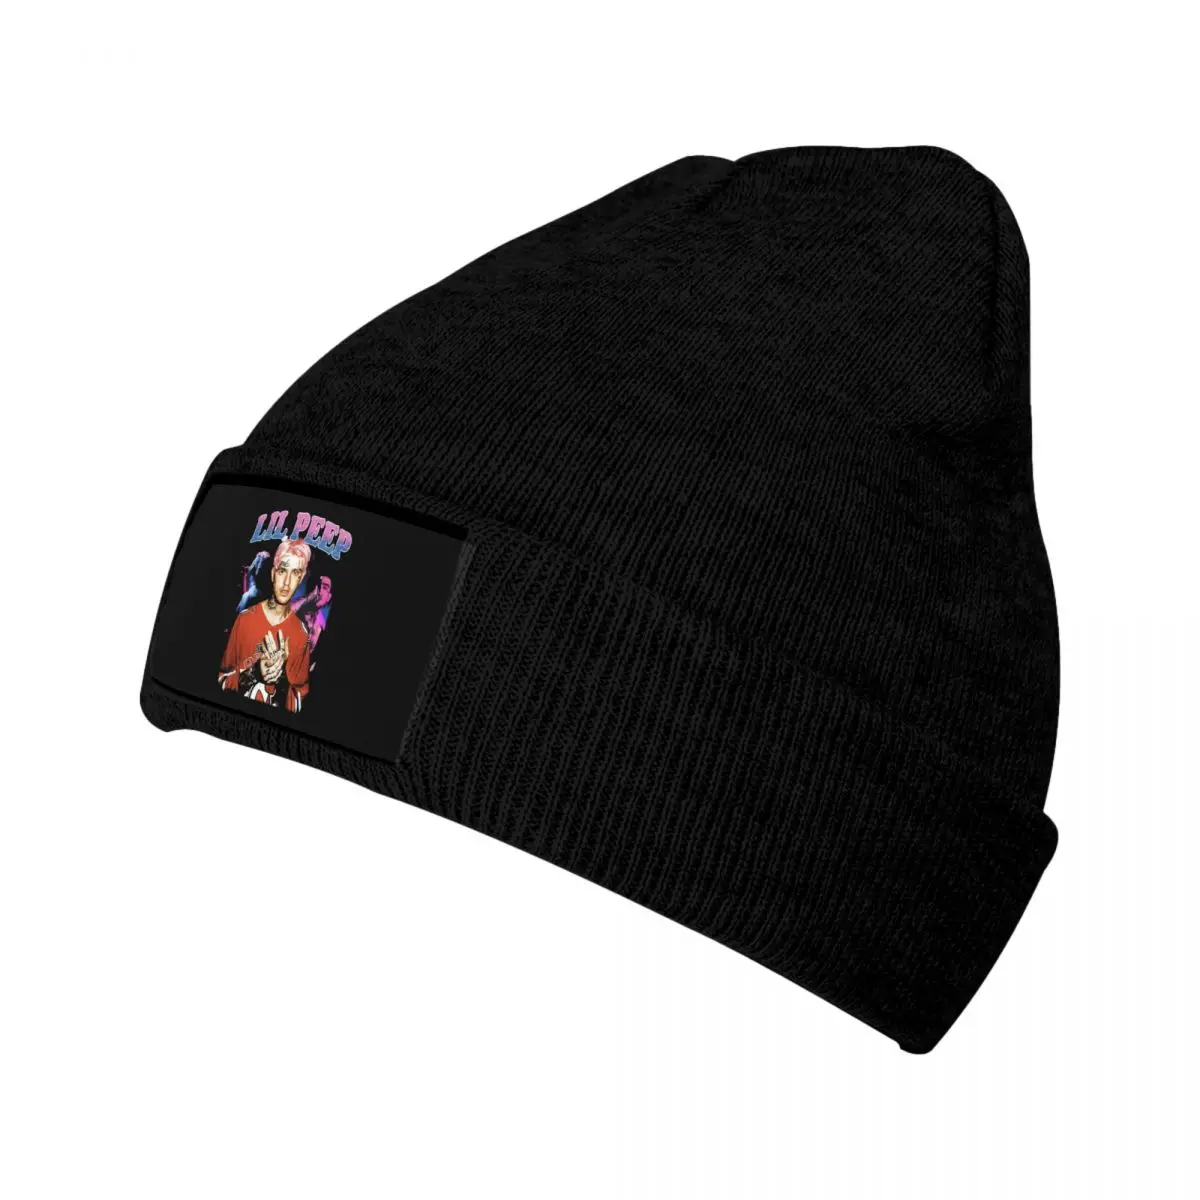 

Lil Peep 90s Rapper Knit Hat Beanies Autumn Winter Hat Warm Unisex Street Caps for Men Women